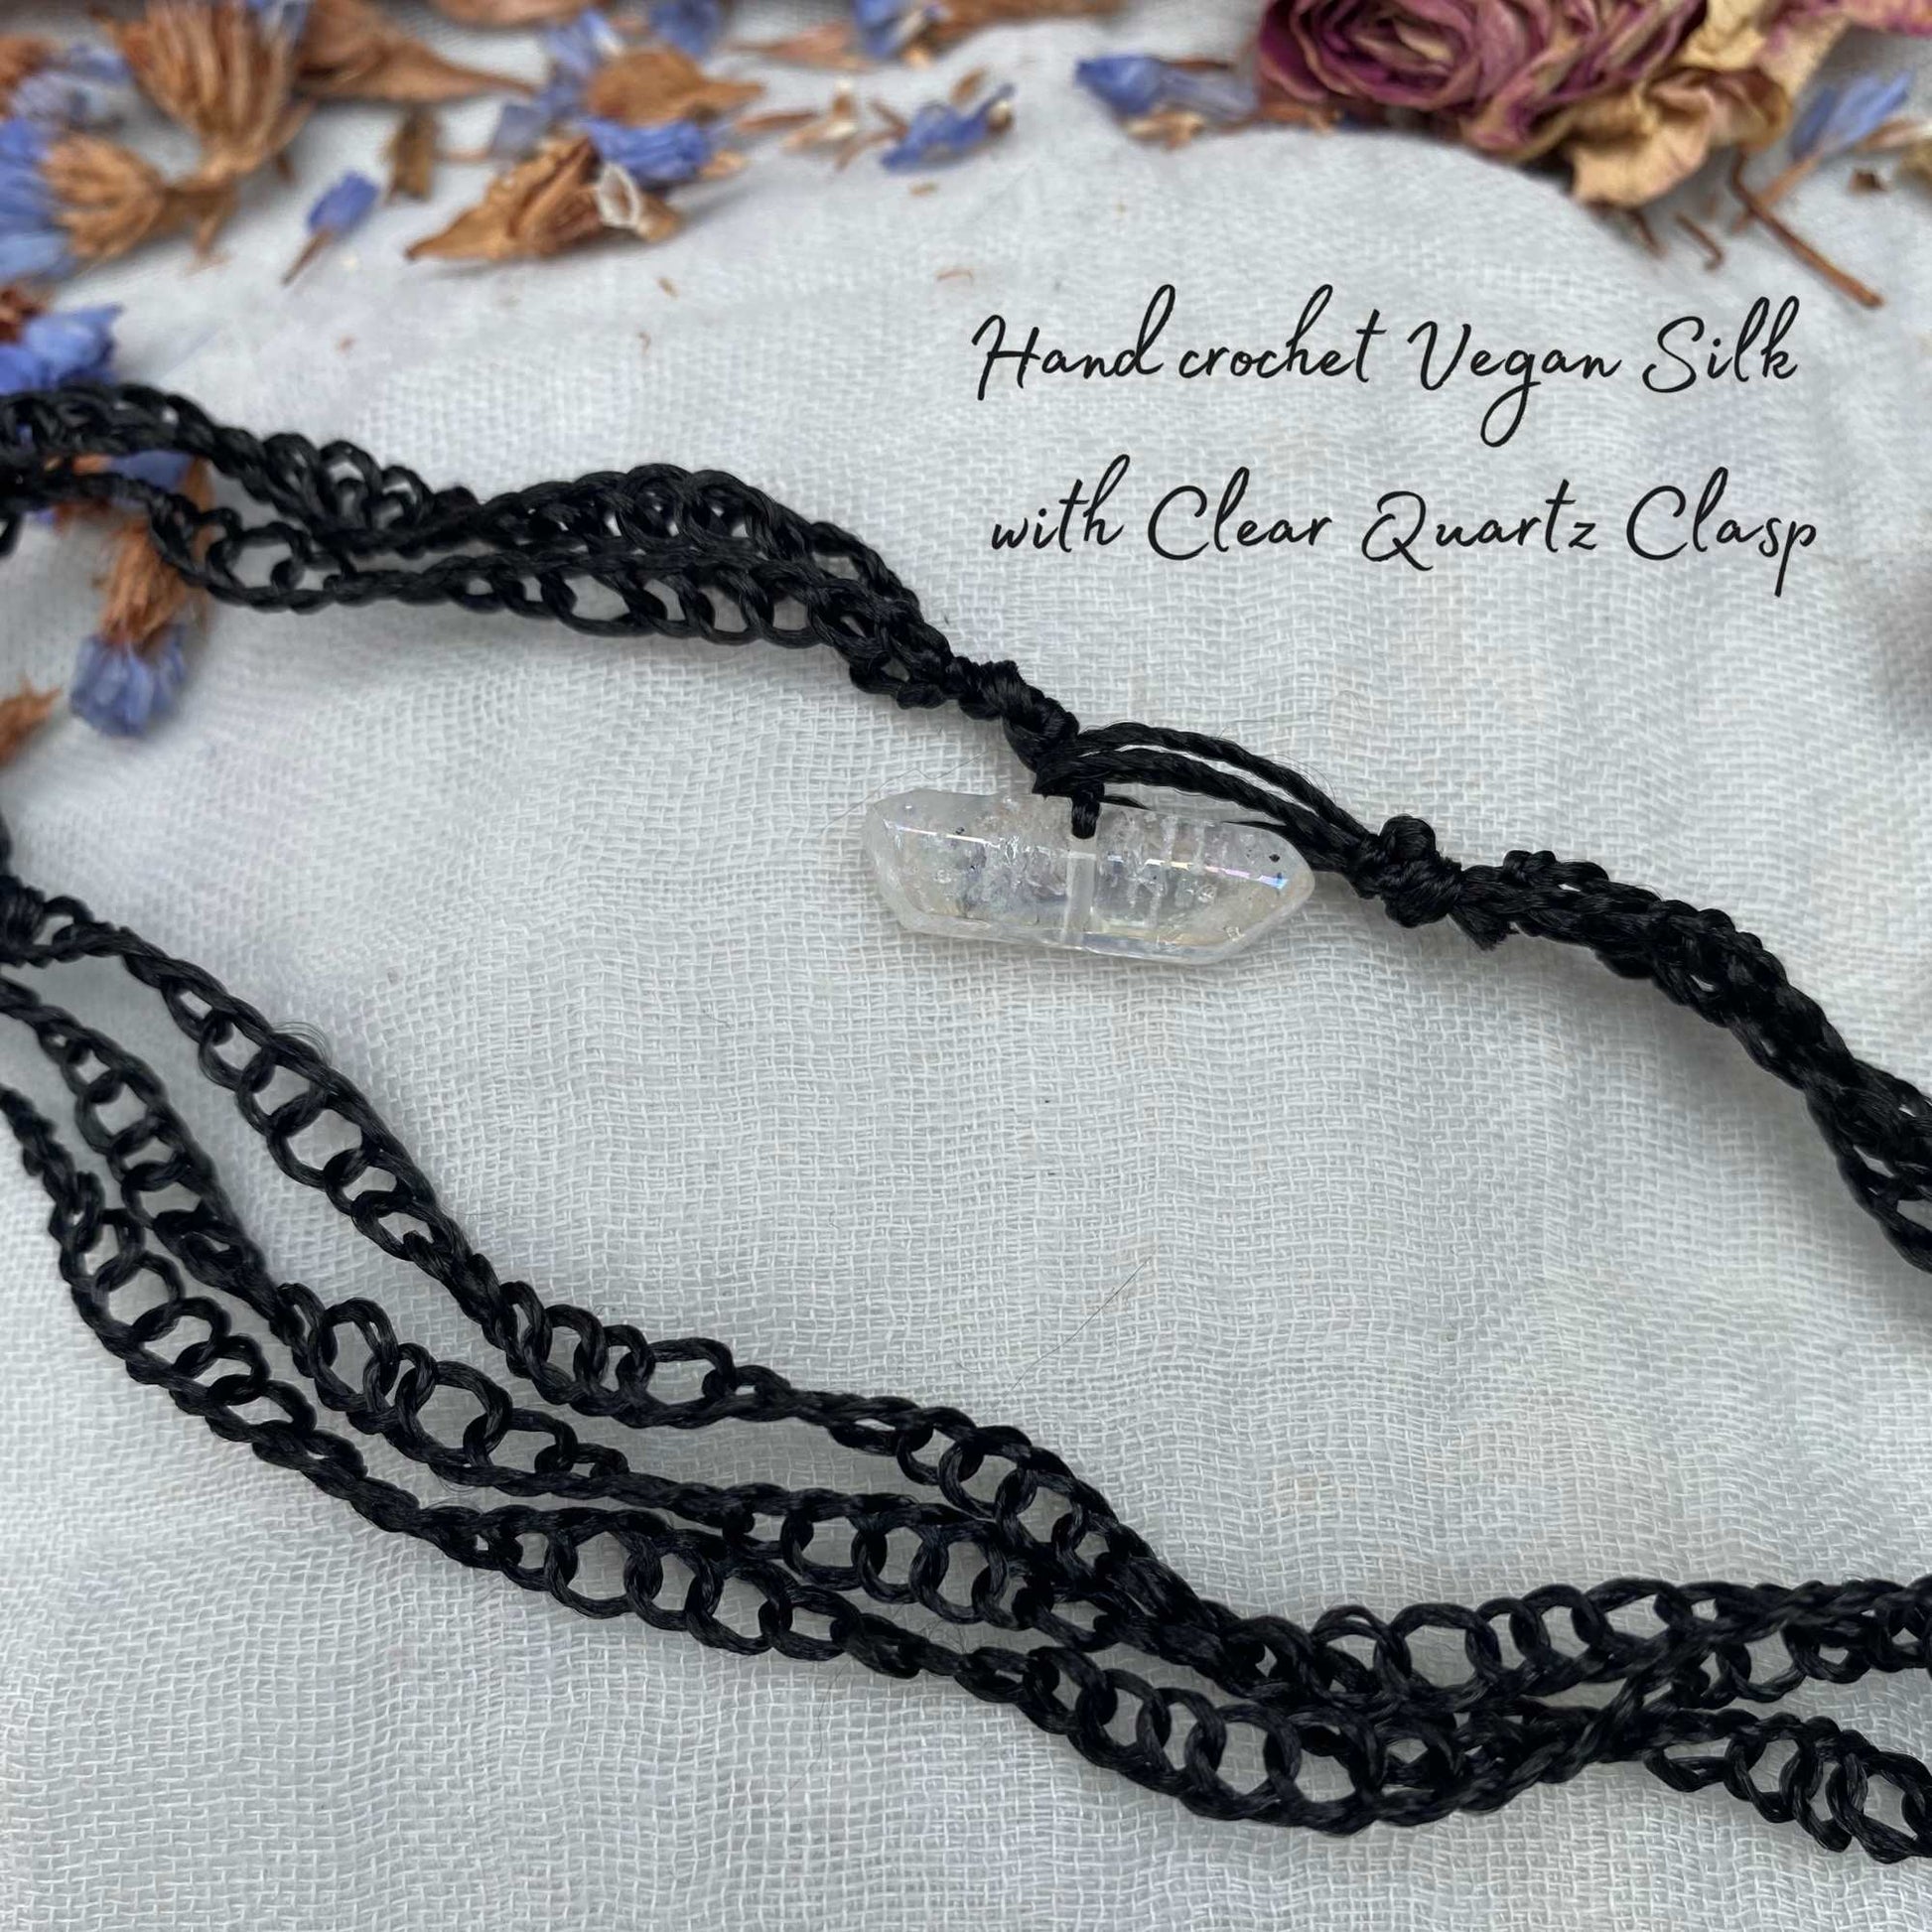 vegan silk necklace with quartz crystal clasp